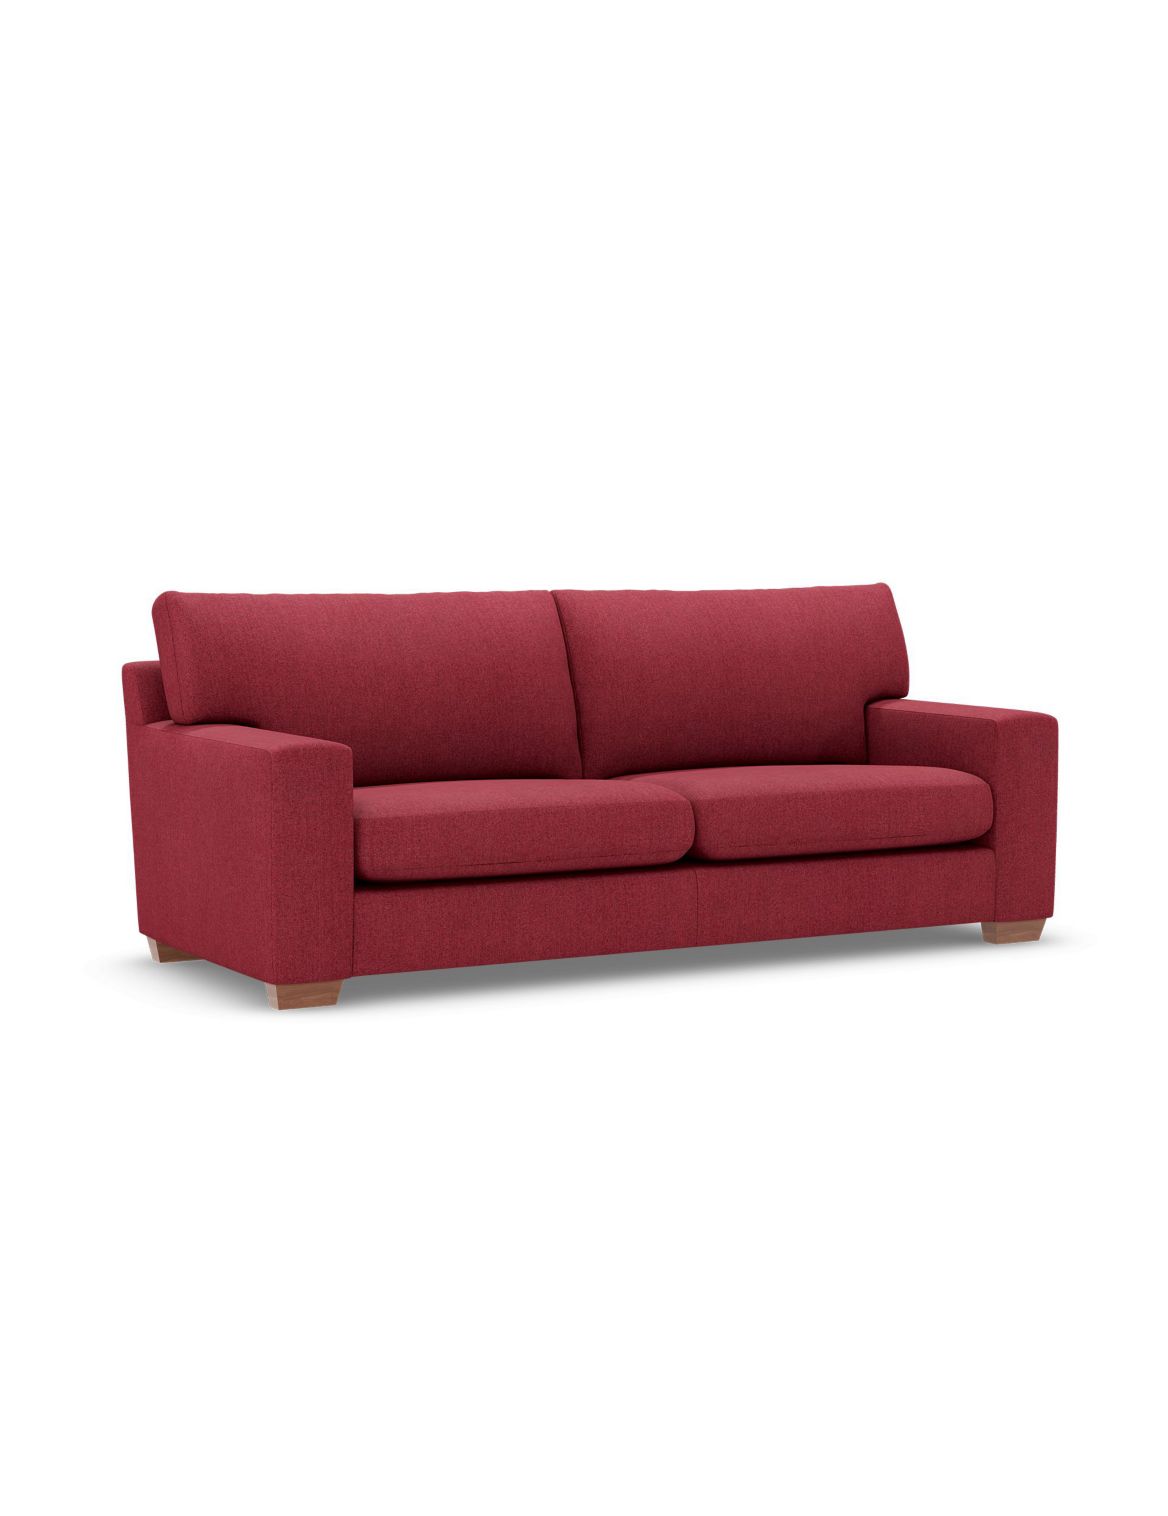 Alfie Large Sofa red